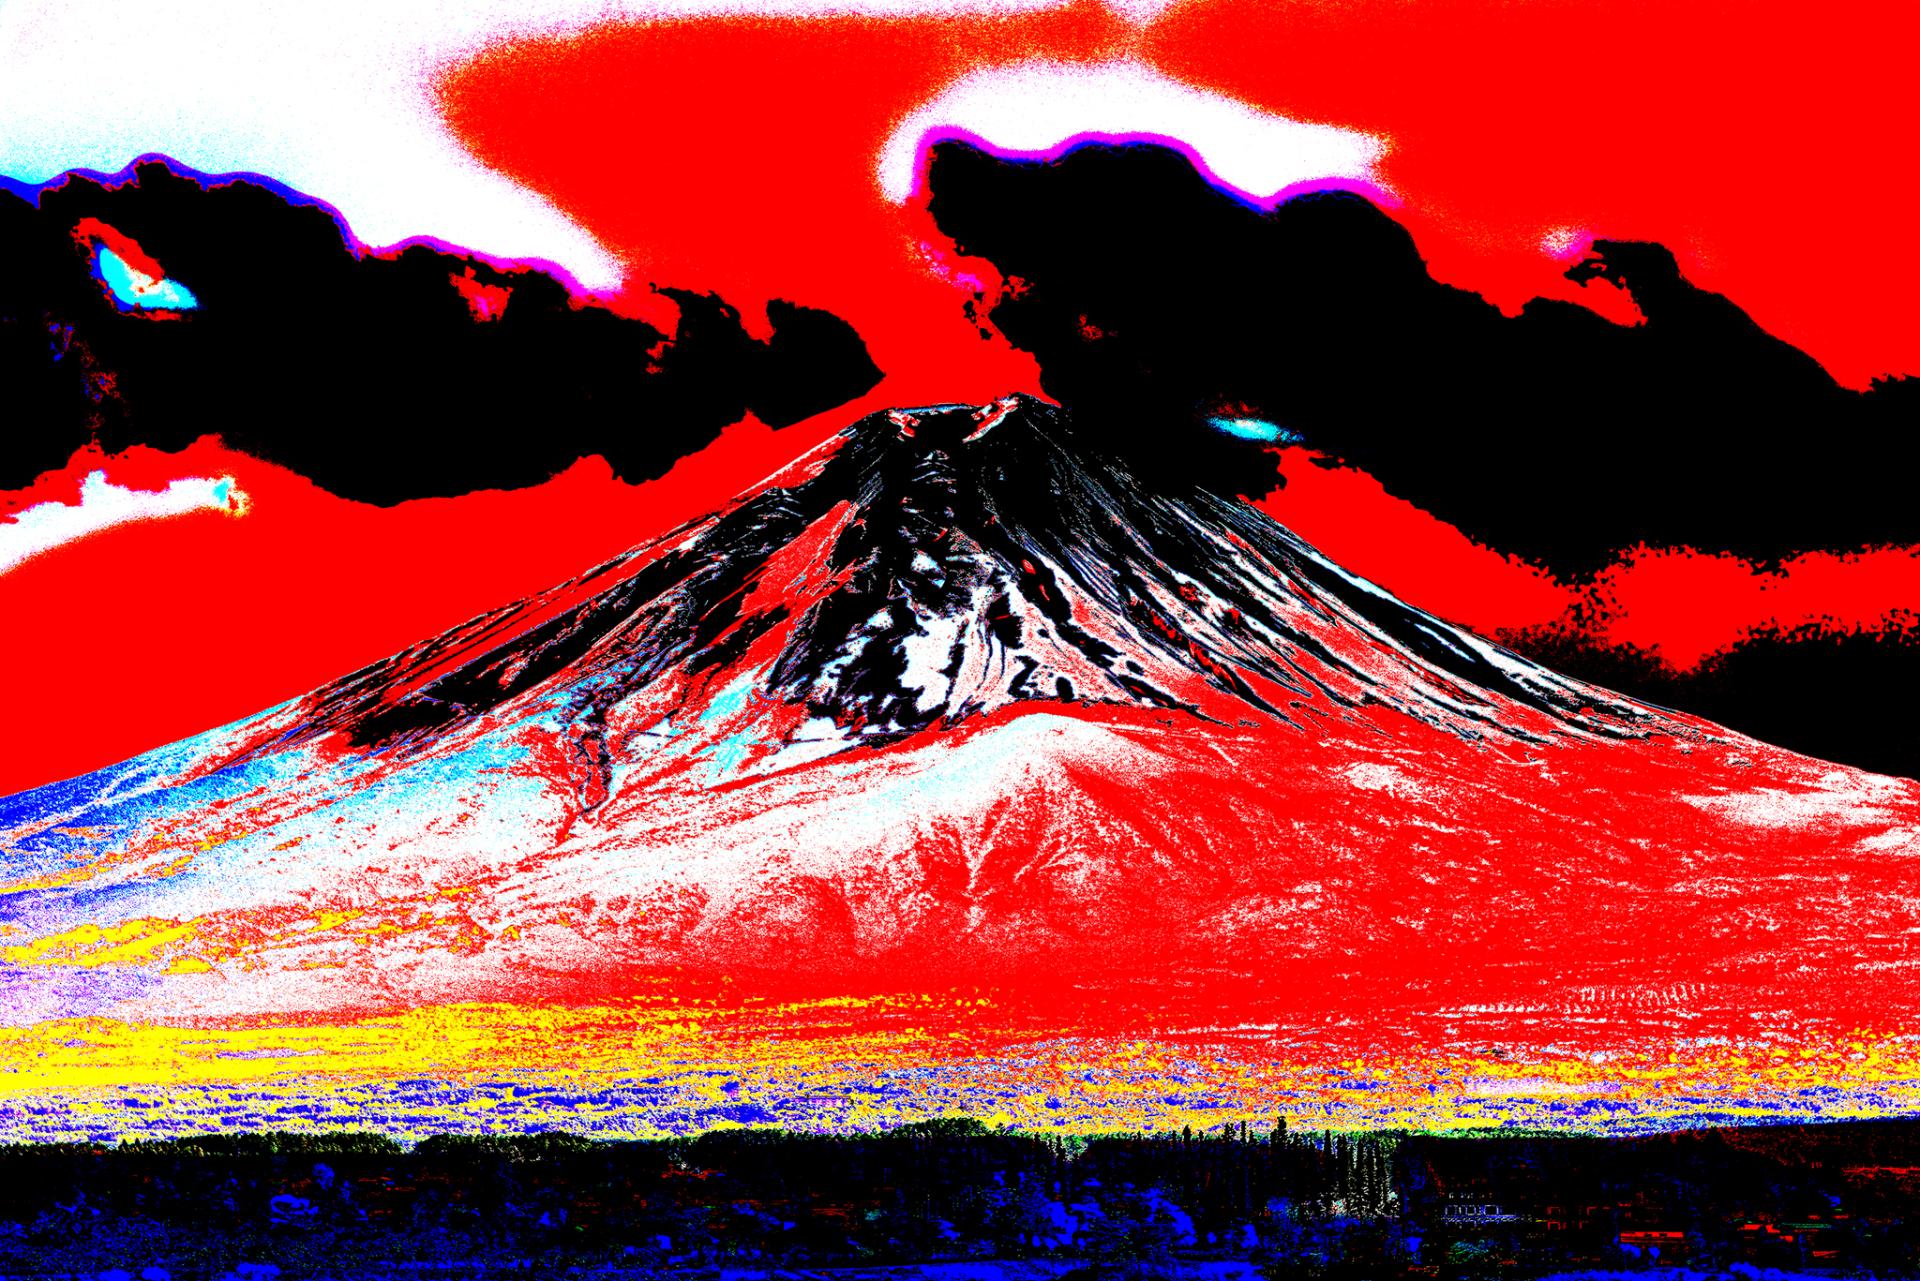 London Photography Awards Winner - Print of Mount Fuji